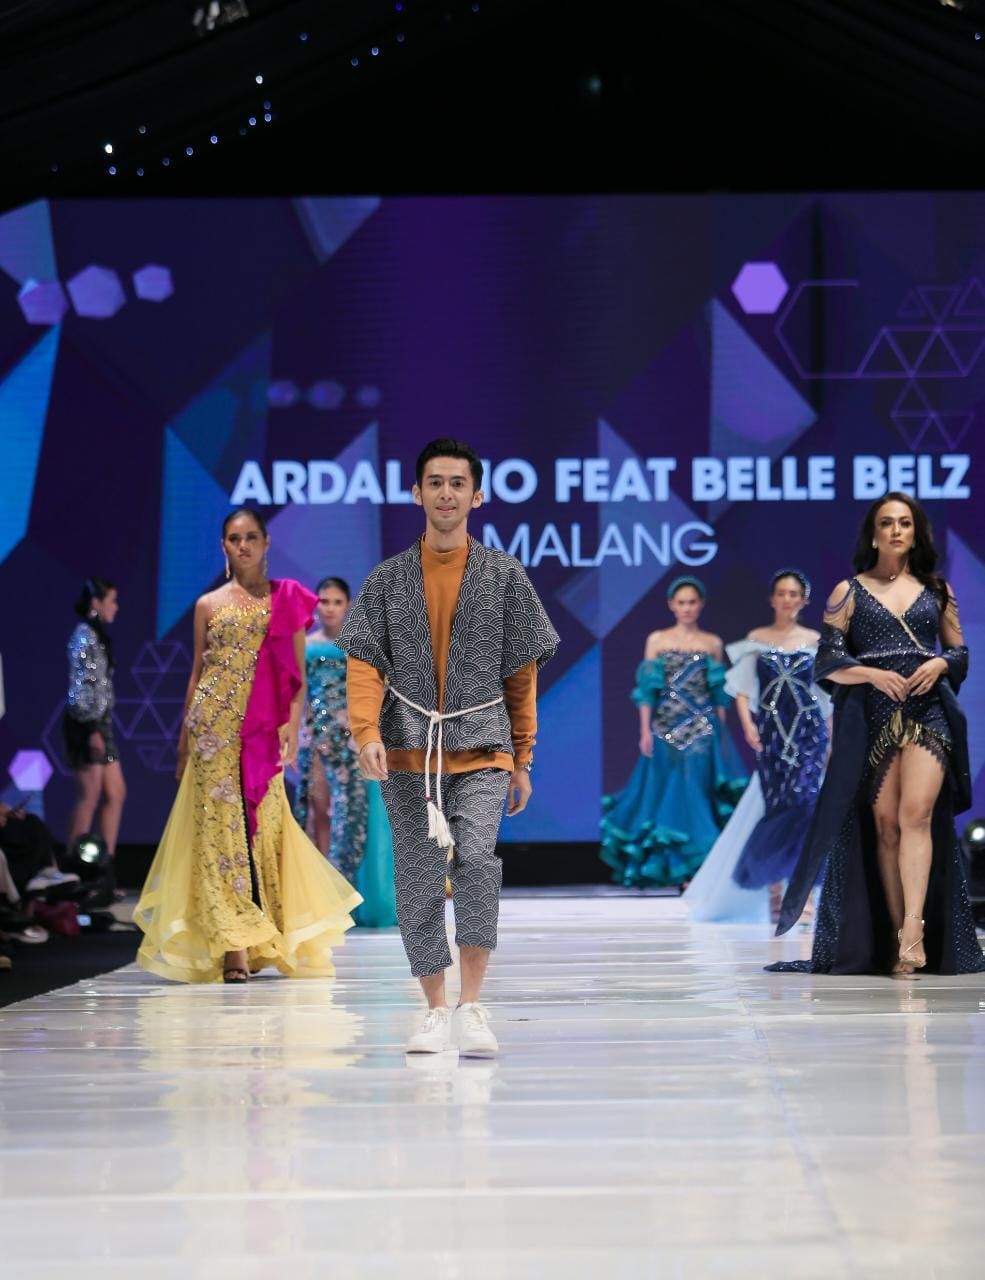 ardalano dalam fashion show bekerja sama dengan Belle Belz